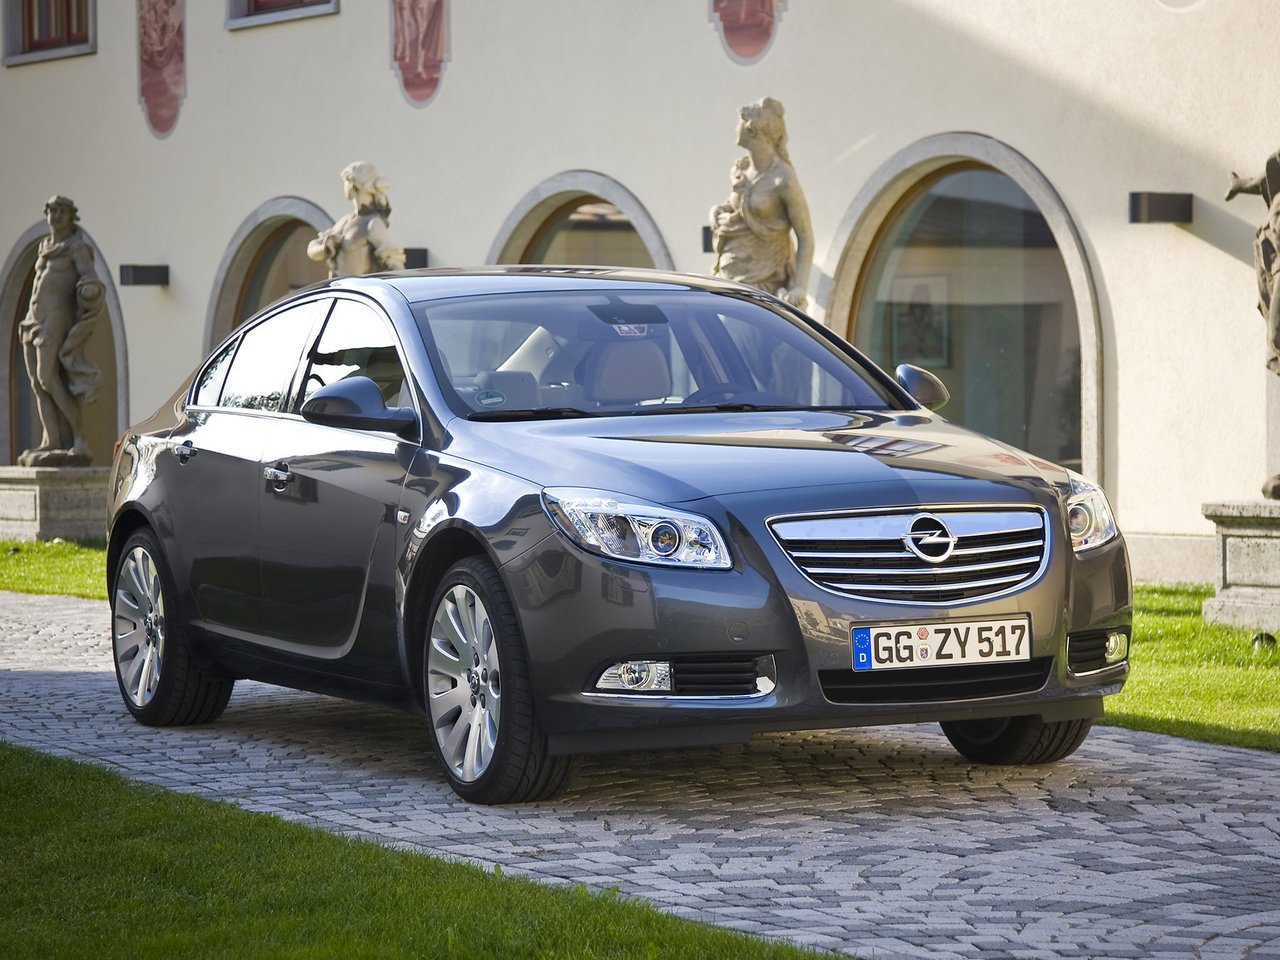 Расход газа семи комплектаций седана Opel Insignia. Разница стоимости заправки газом и бензином. Автономный пробег до и после установки ГБО.